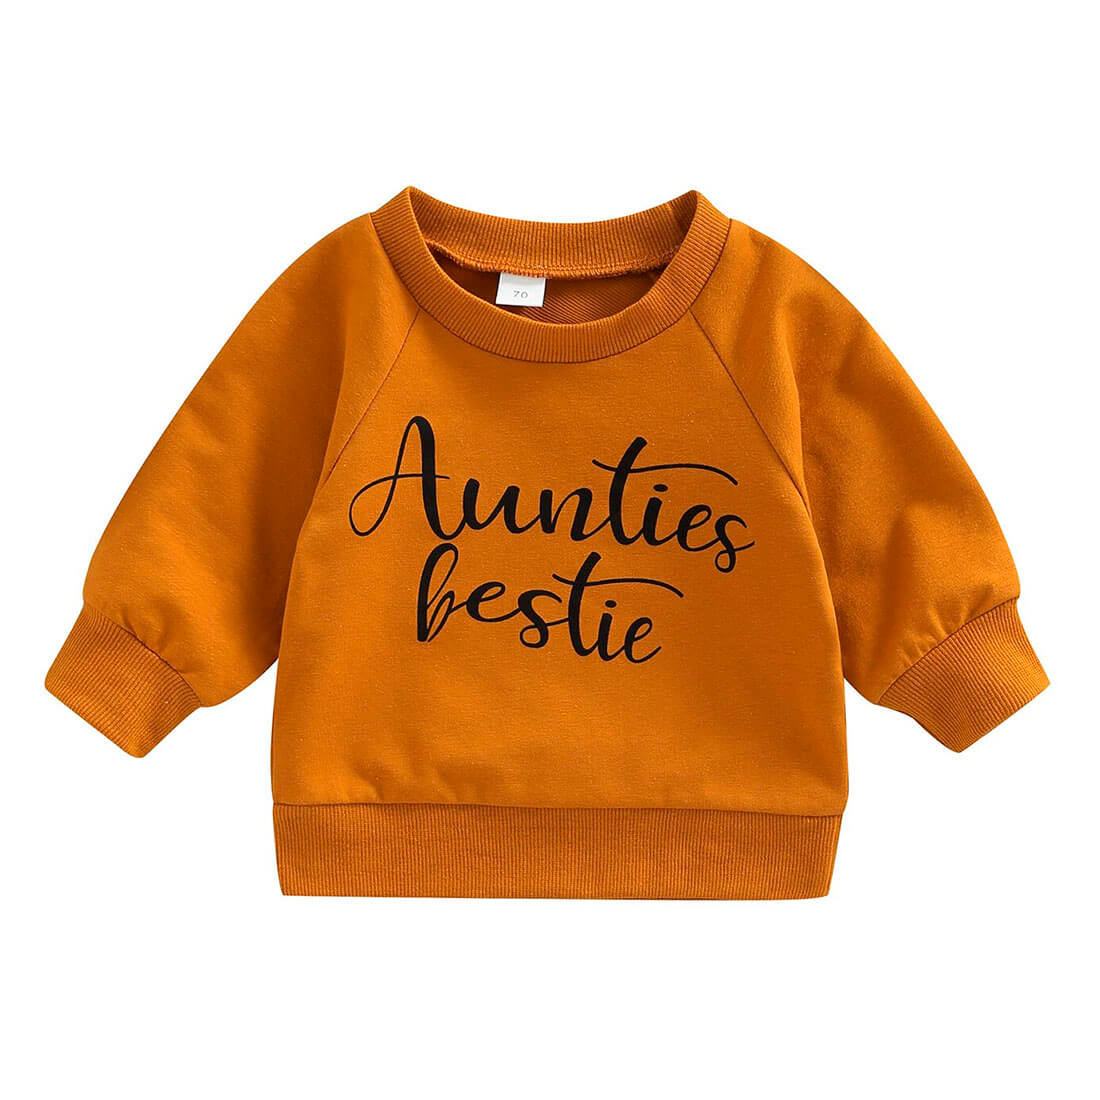 Aunties Bestie Baby Sweatshirt Brown 0-3 M 